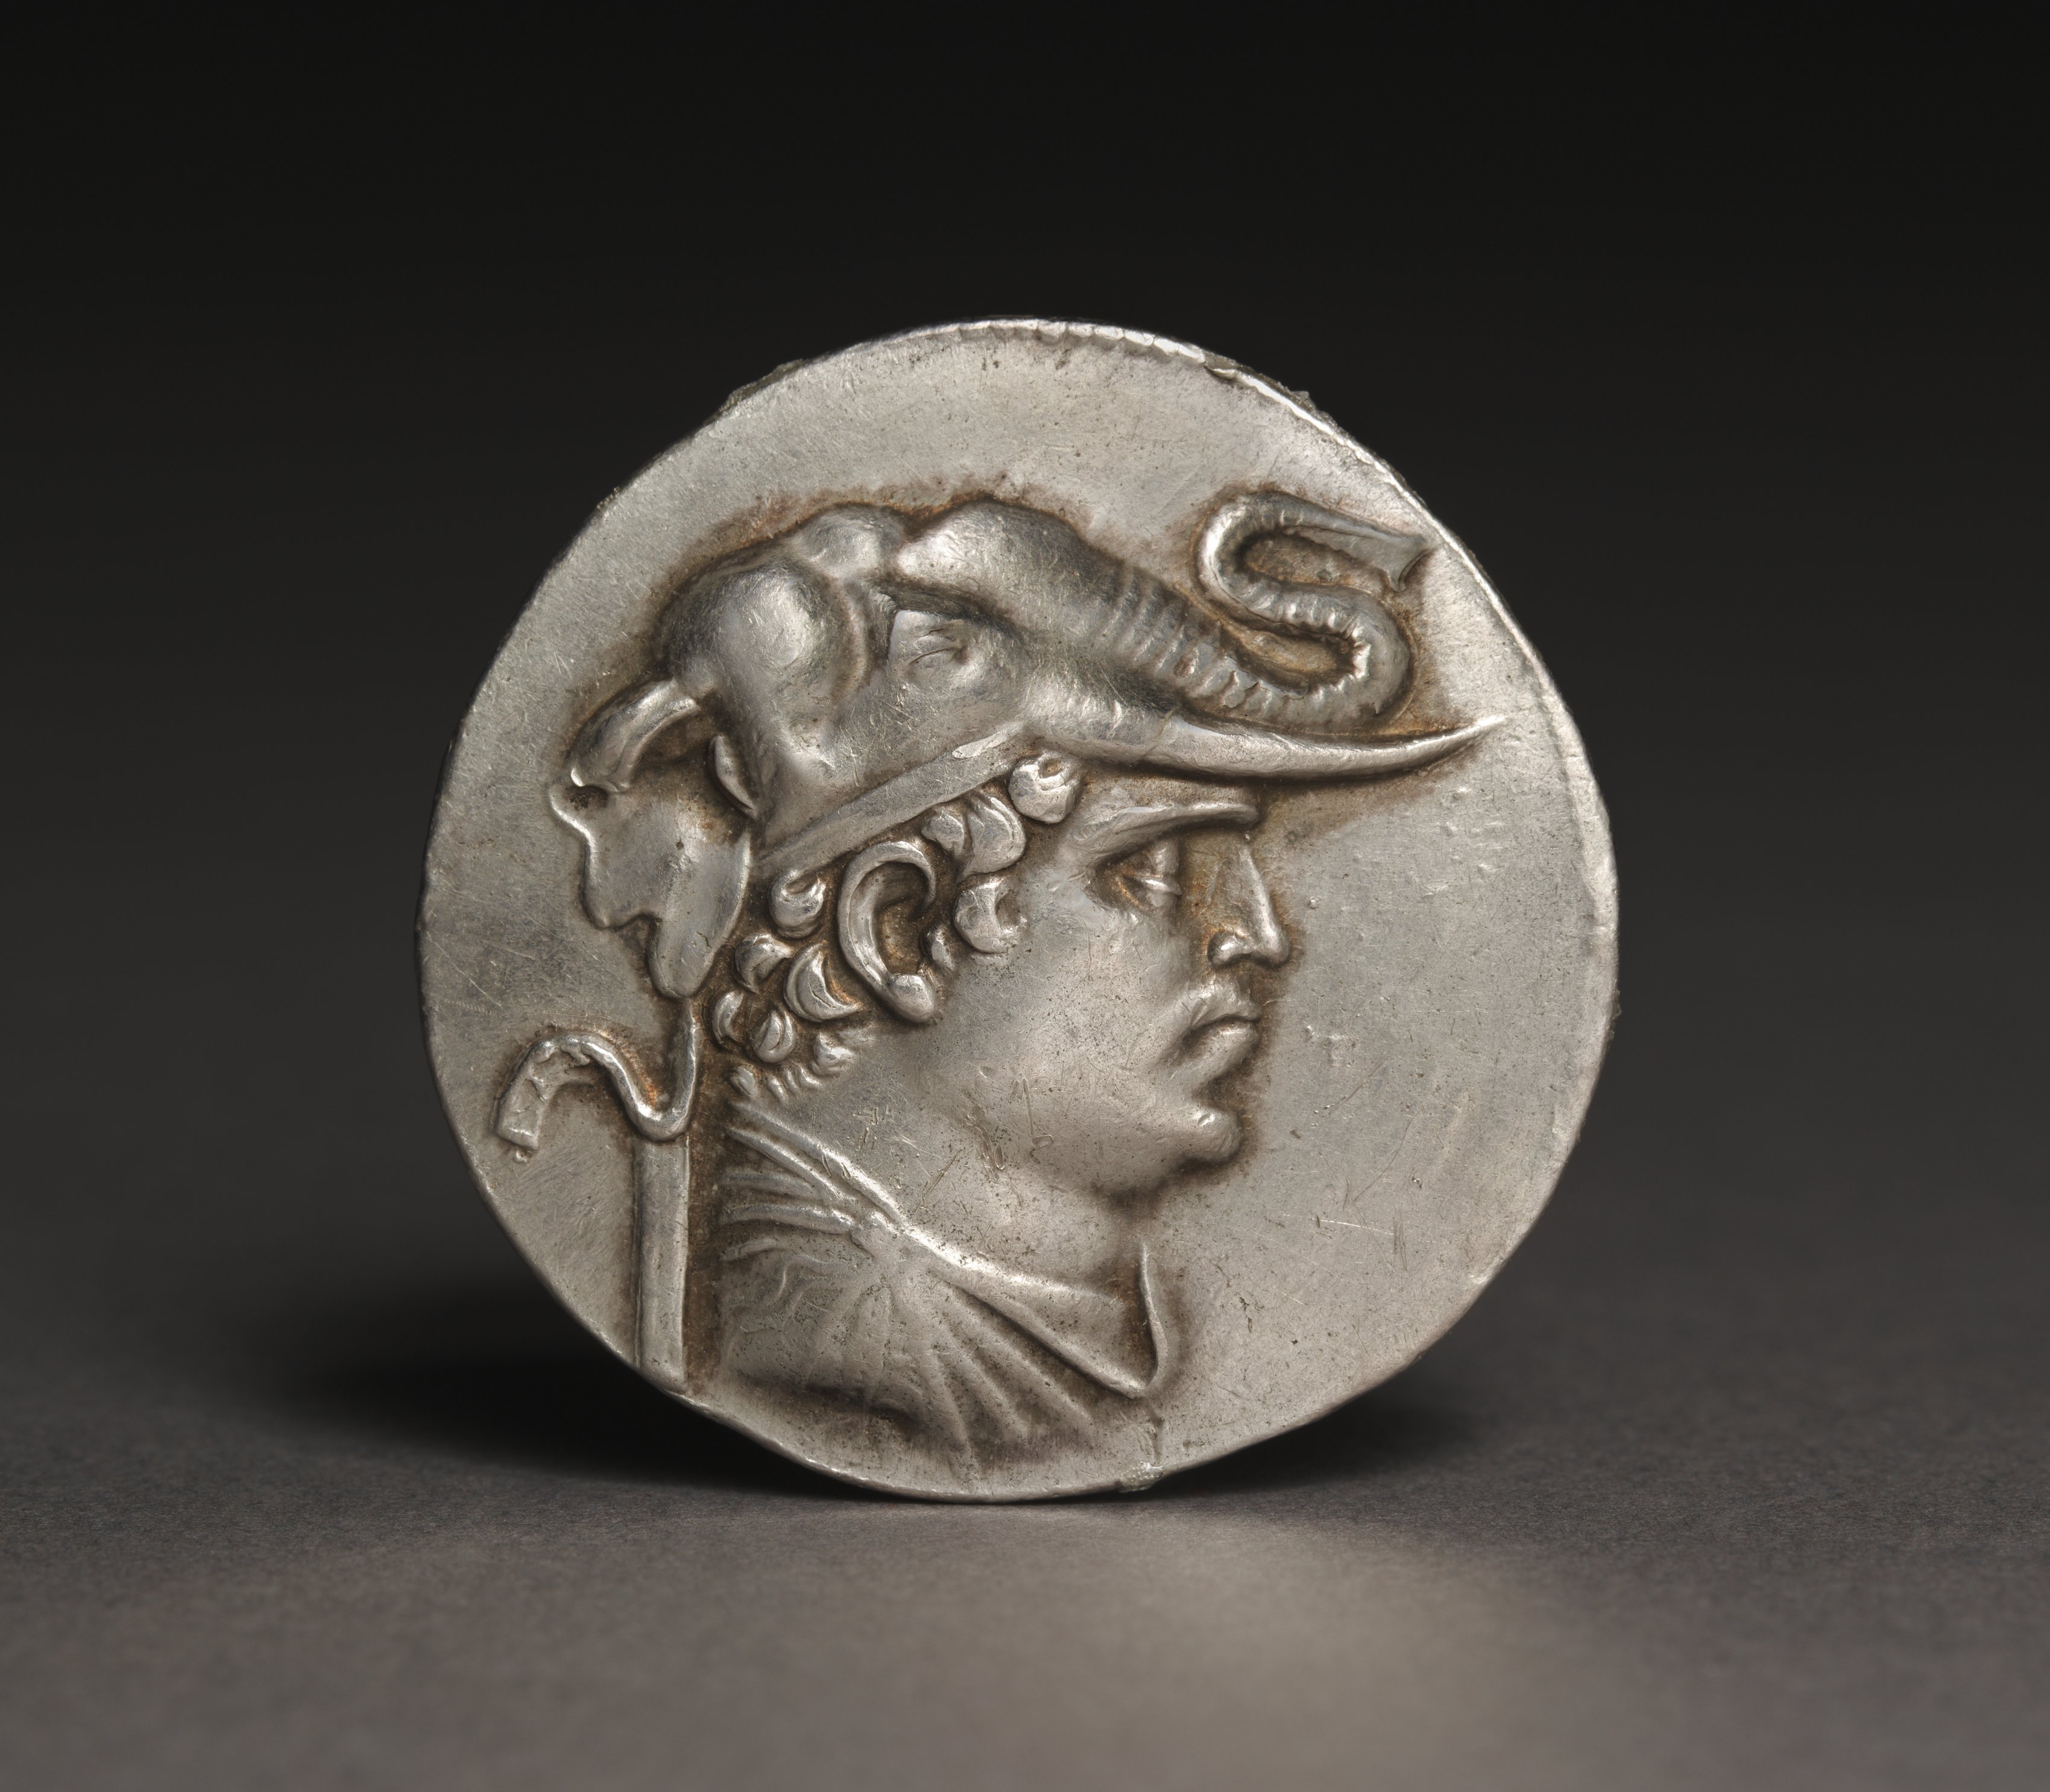 Coin of Demetrios, I (obverse)